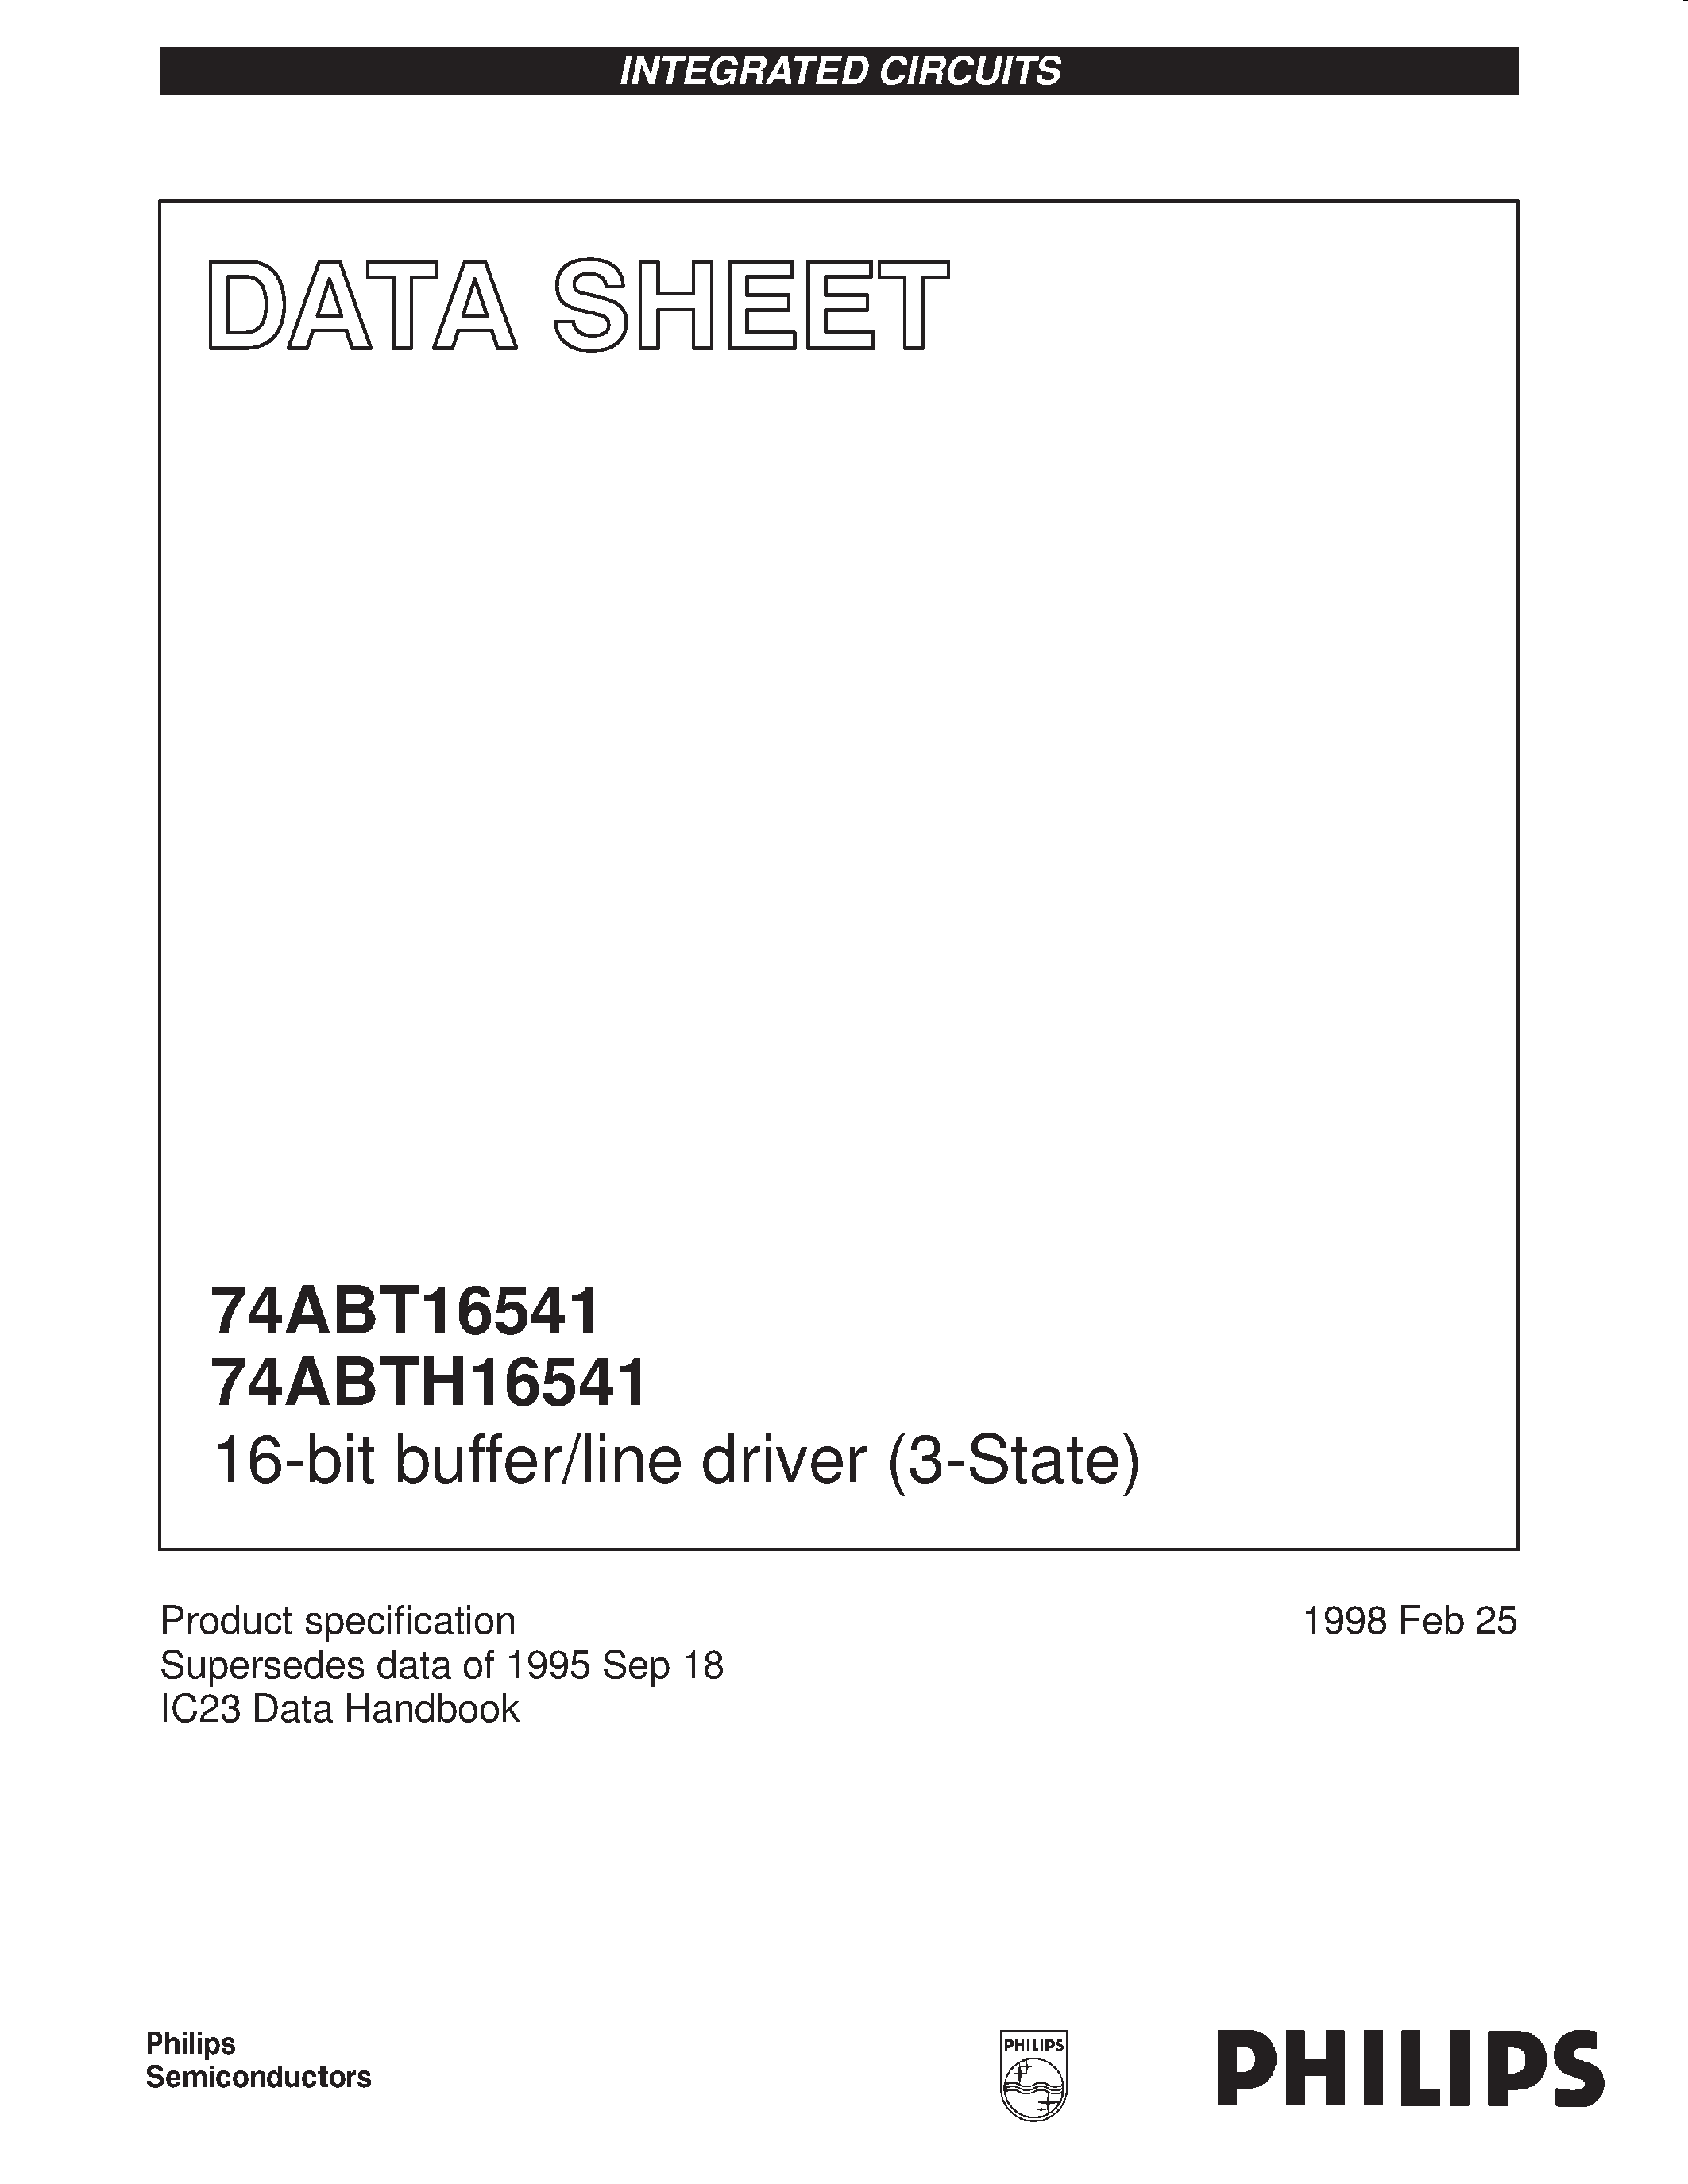 Даташит 74ABTH16541 - 16-bit buffer/line driver 3-State страница 1